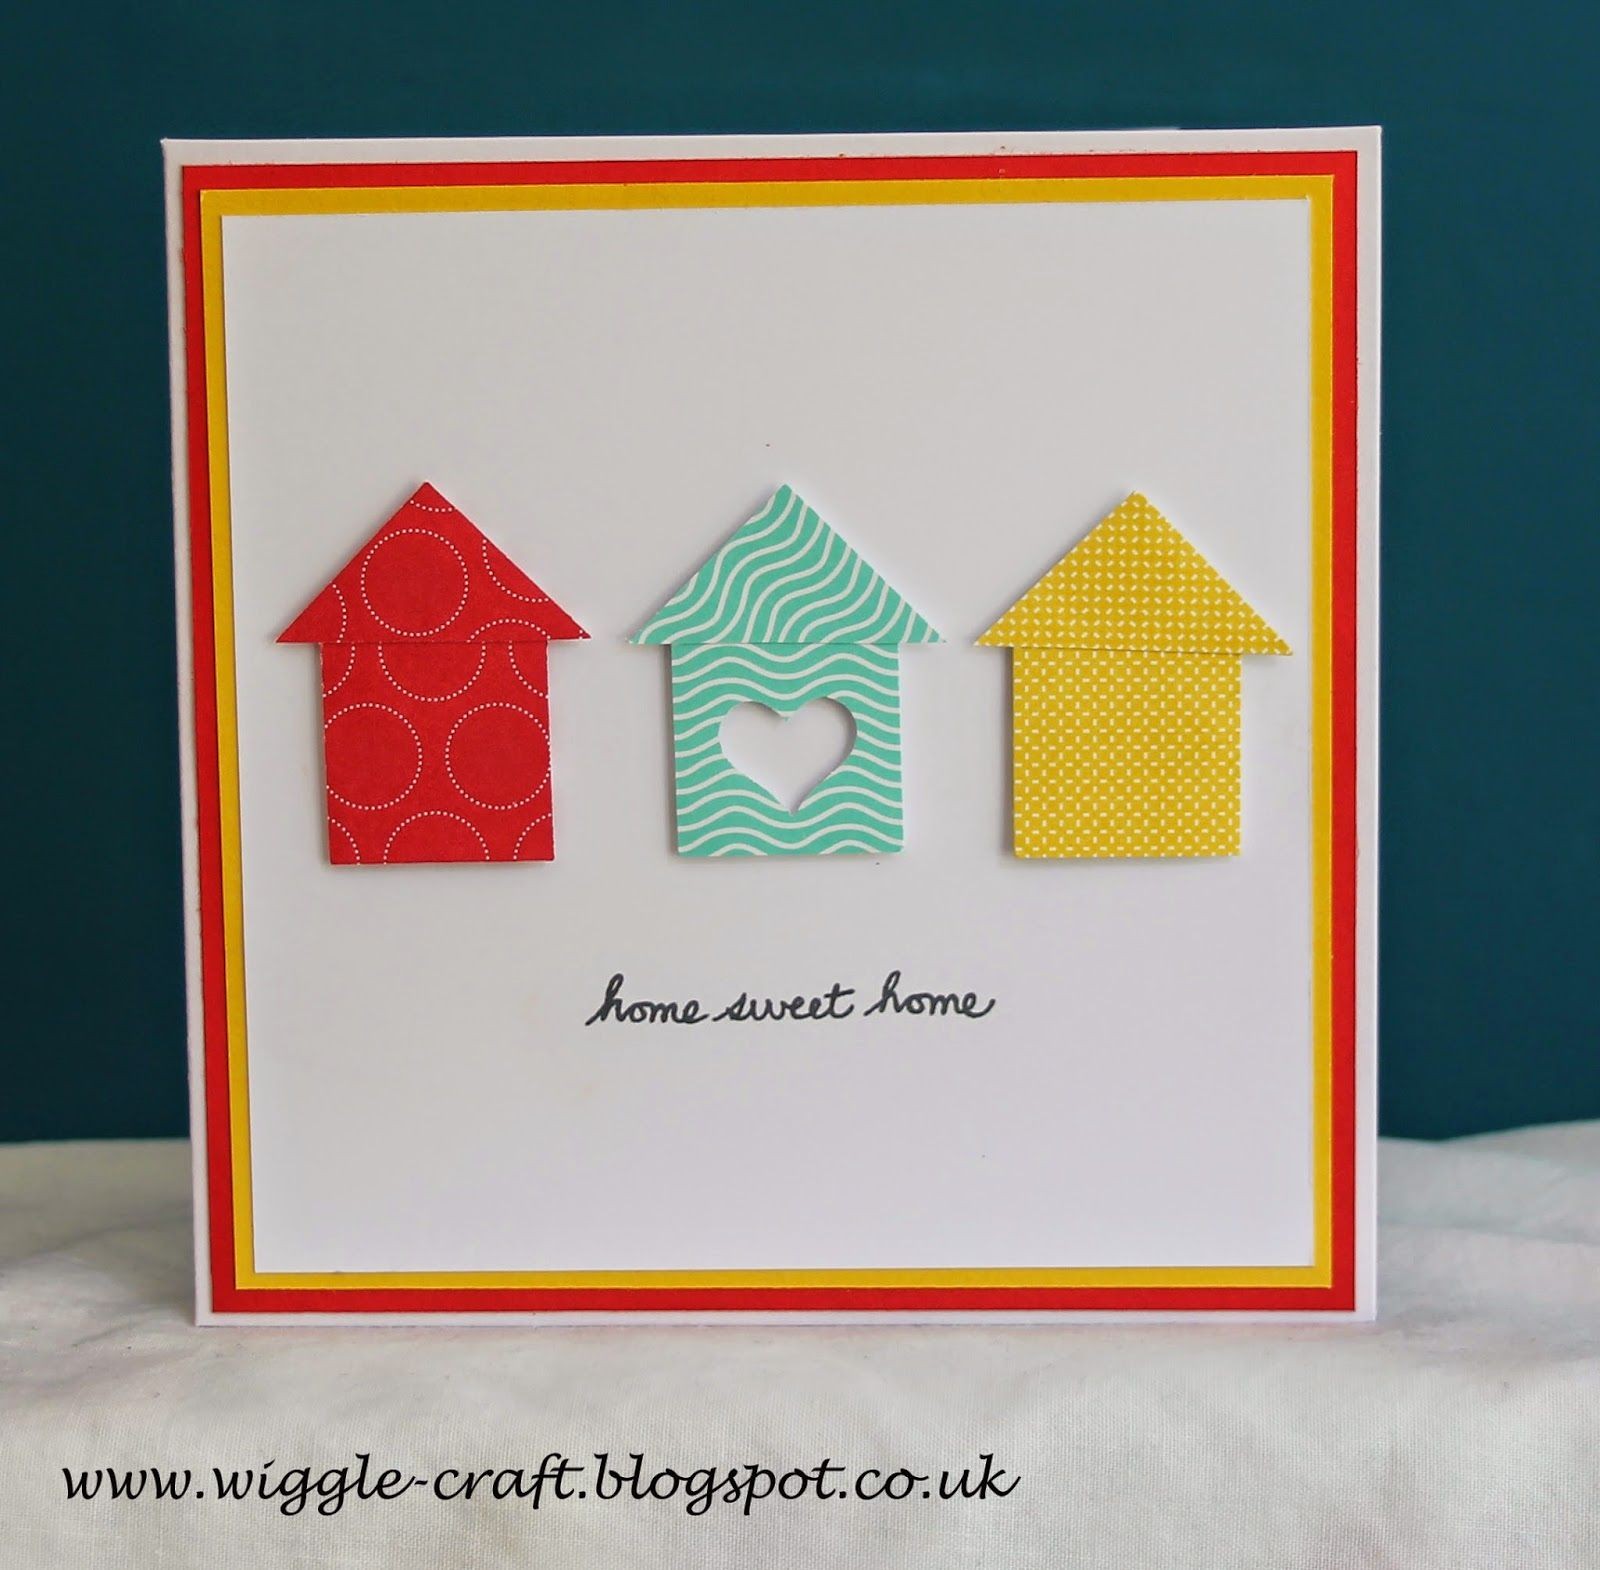 Papercraft Home Wiggle Craft "home Sweet Home" Cat Herrington Jul 27 14